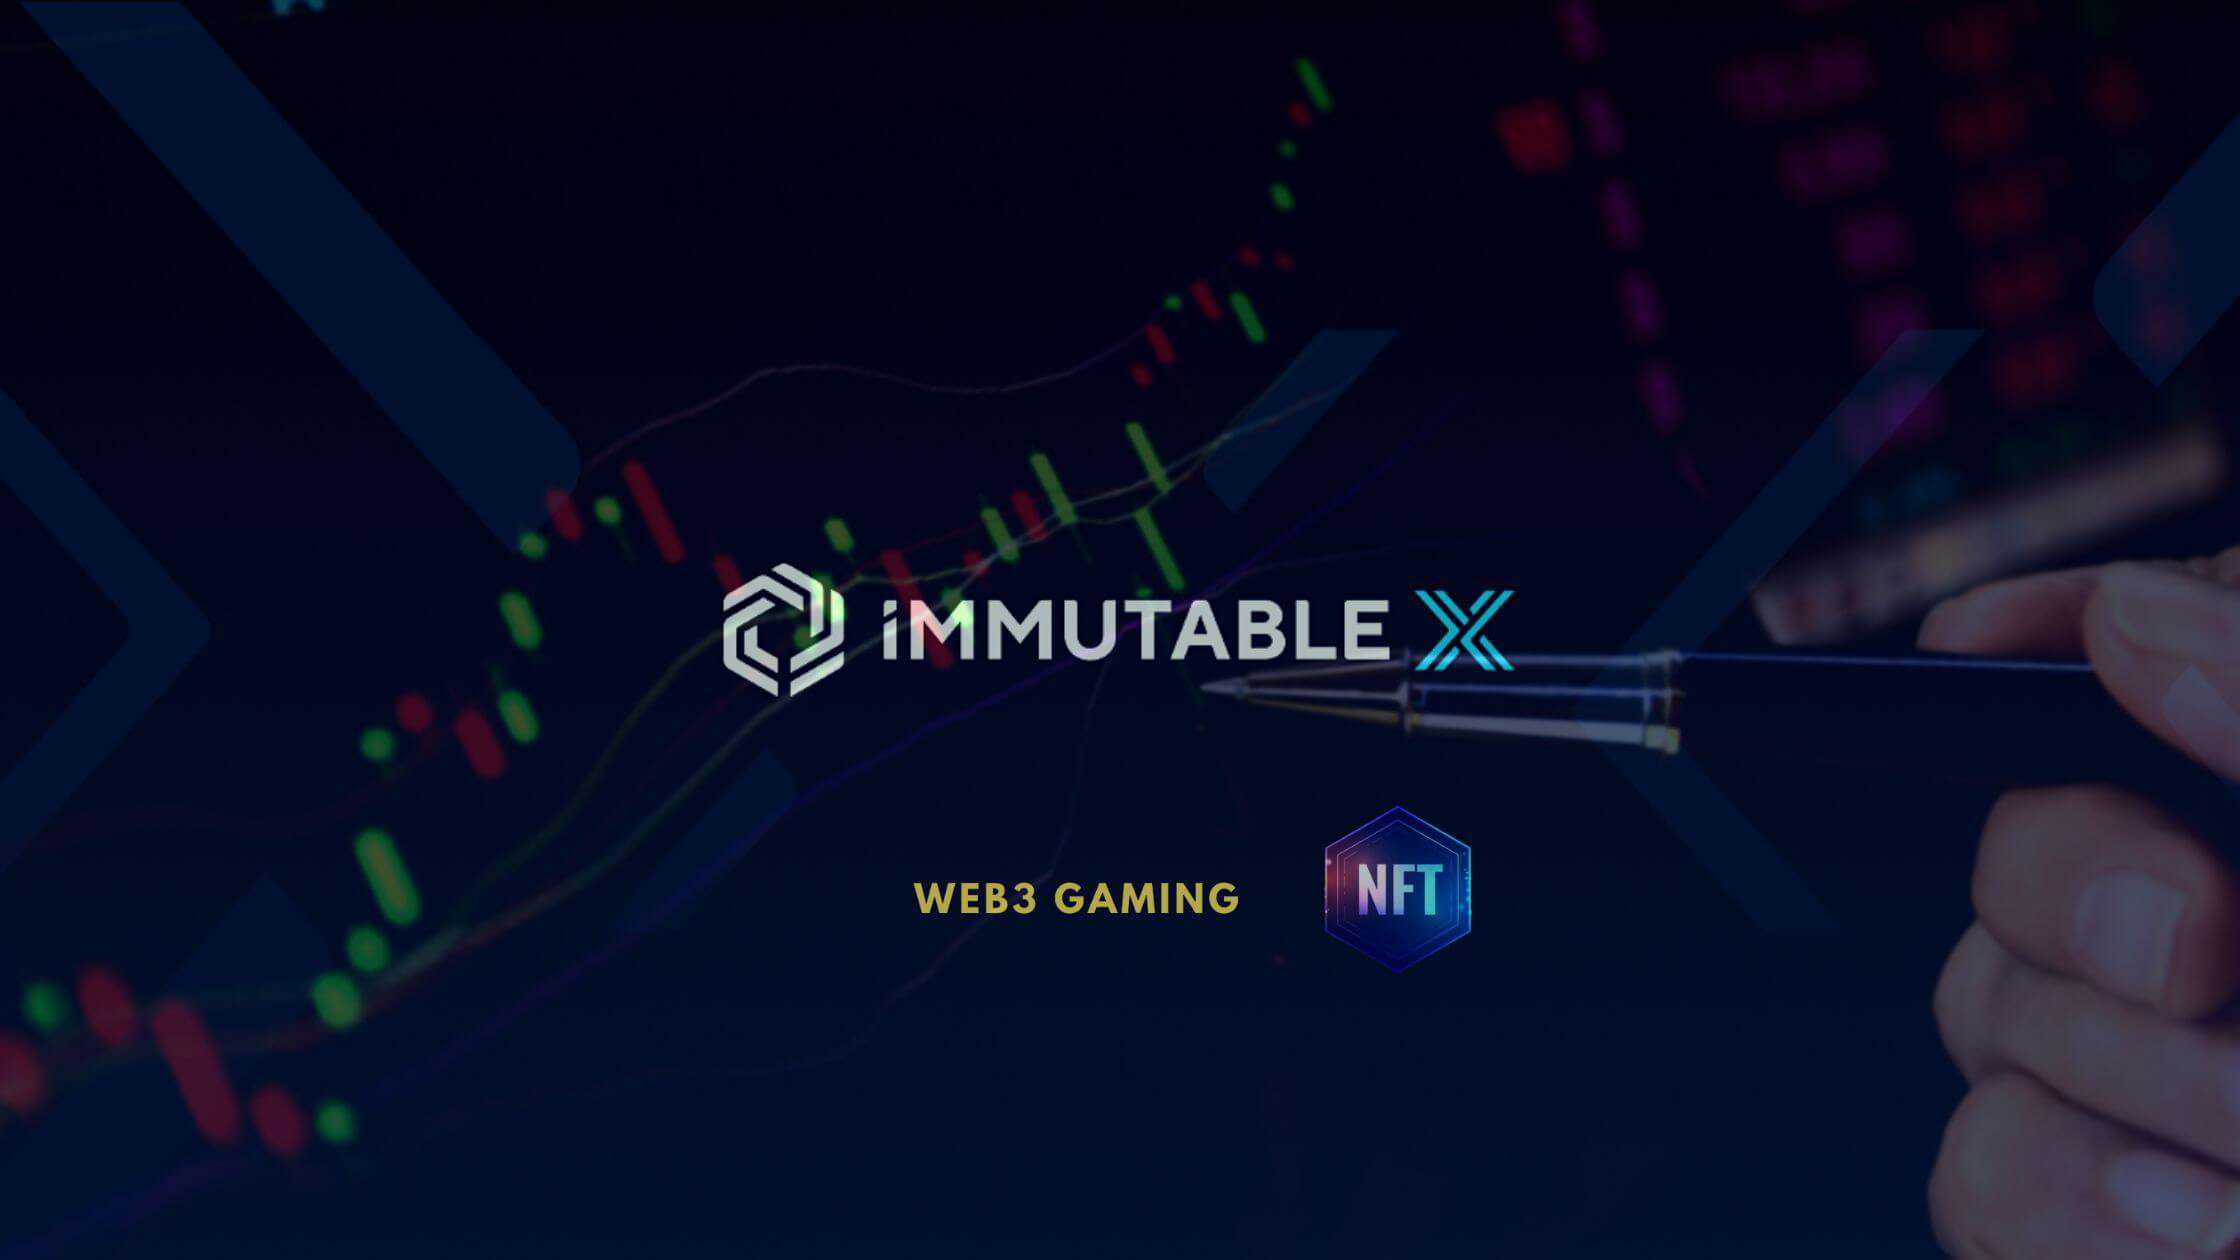 About ImmutableX (IMX)